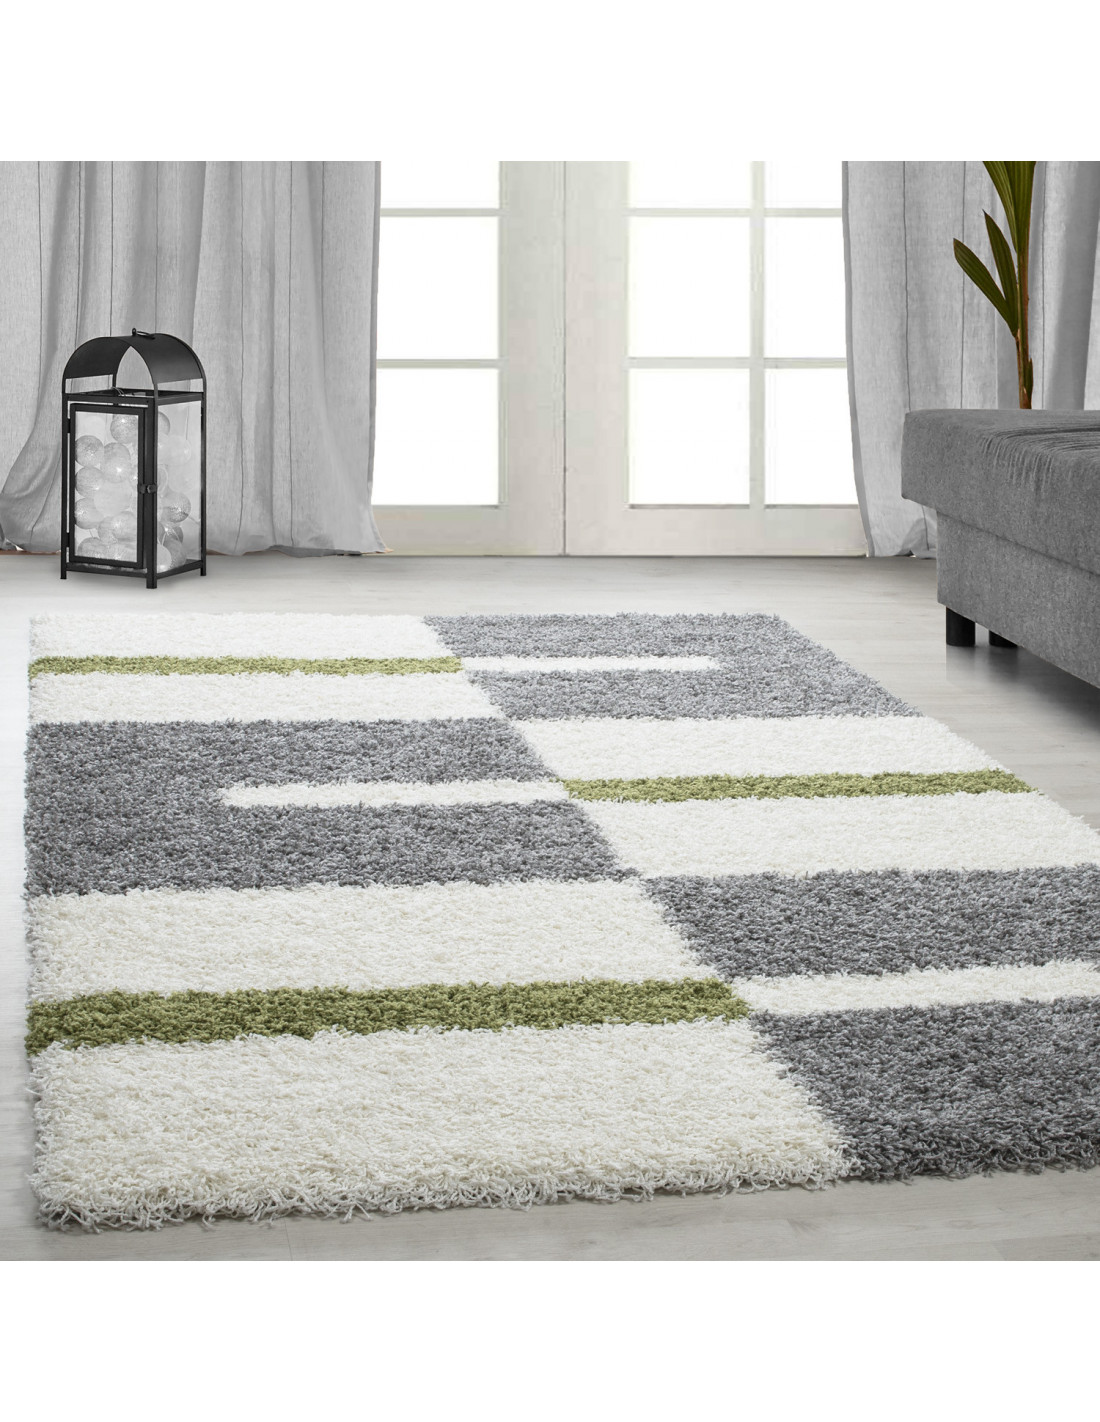 Hoogpolig tapijt, poolhoogte 3 cm, grijs-wit-groen